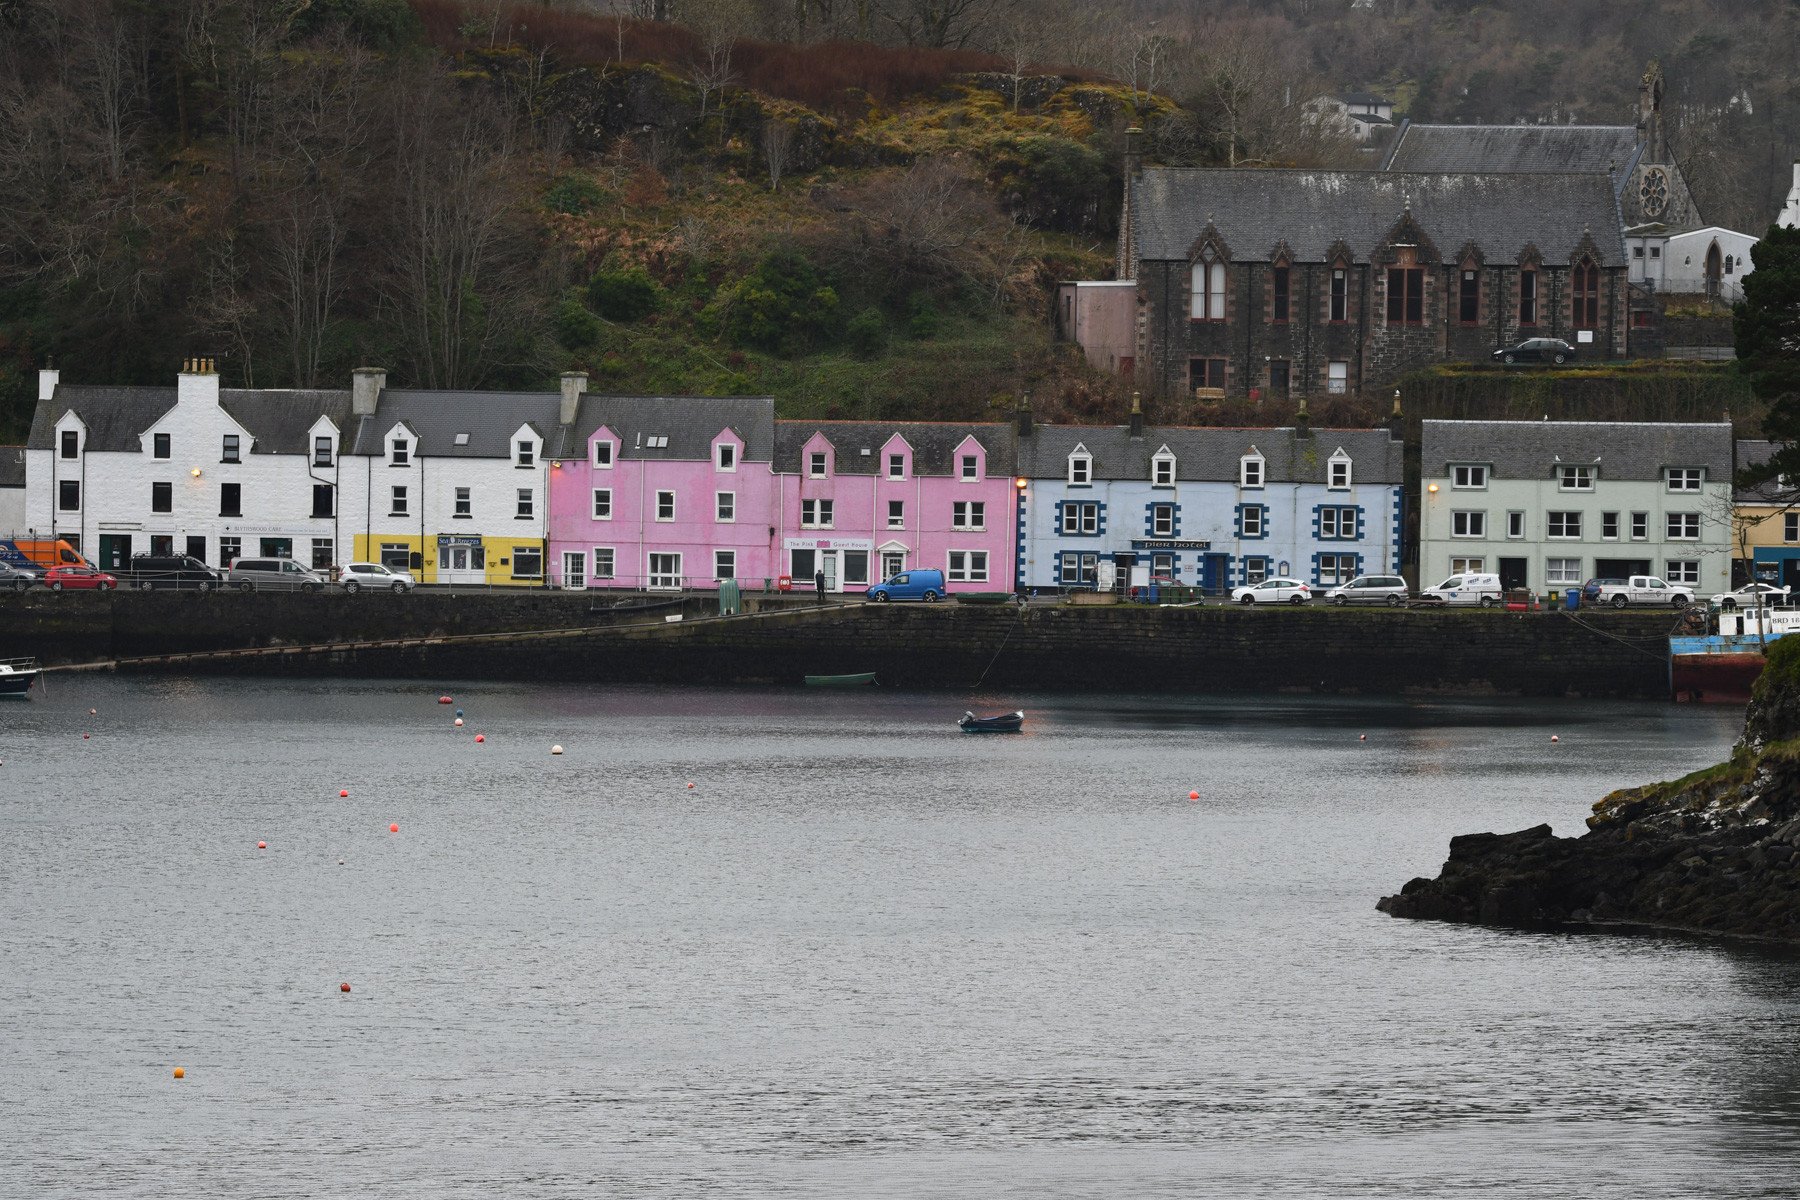 painted houses on Portree, Isle of Skye, Scotland